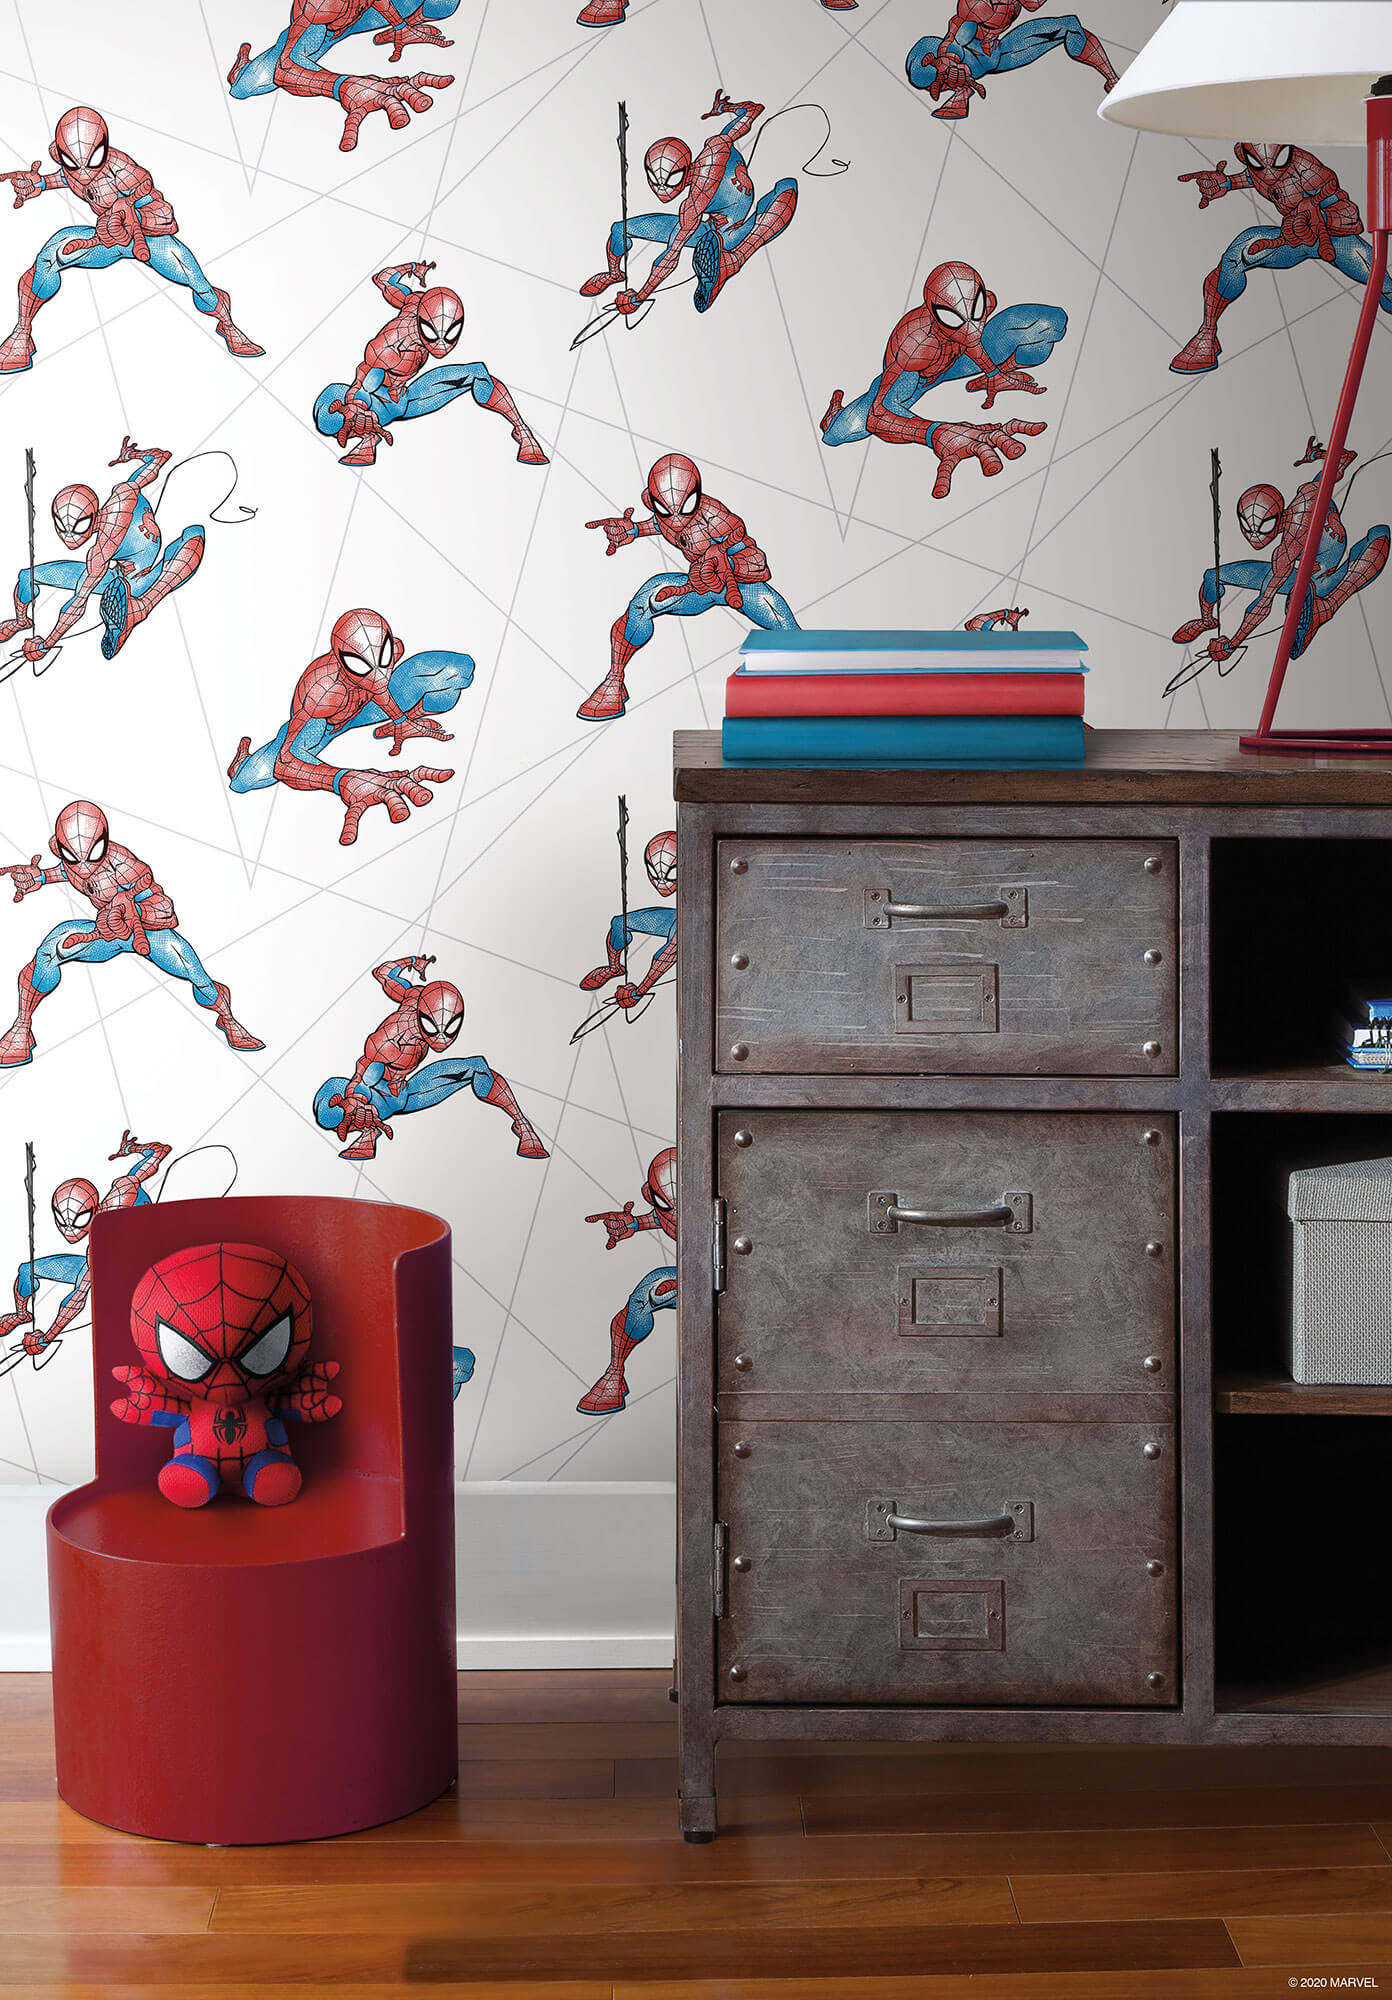 Spider Man Fracture Web Wallpaper - Red & Blue